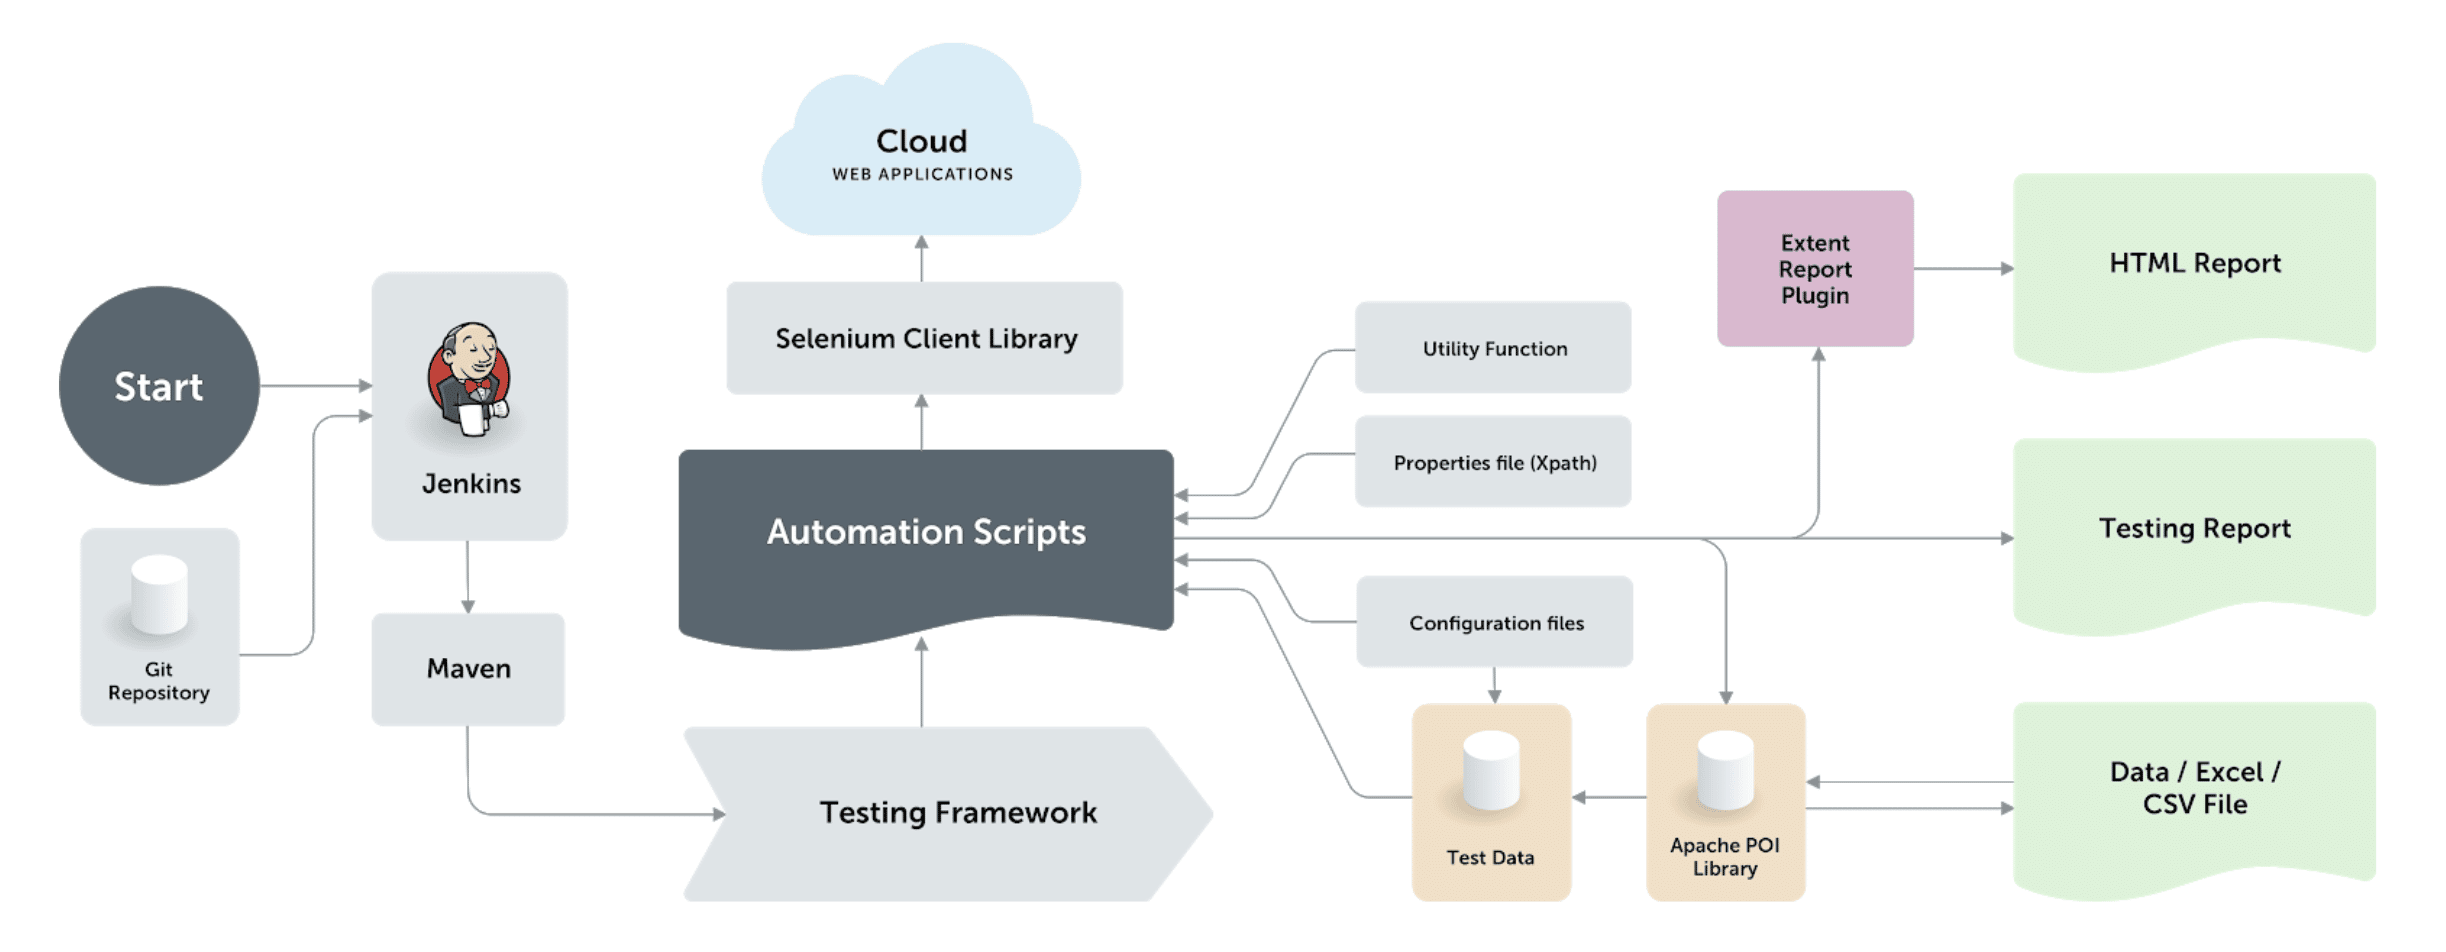 Automated Testing Framework map.